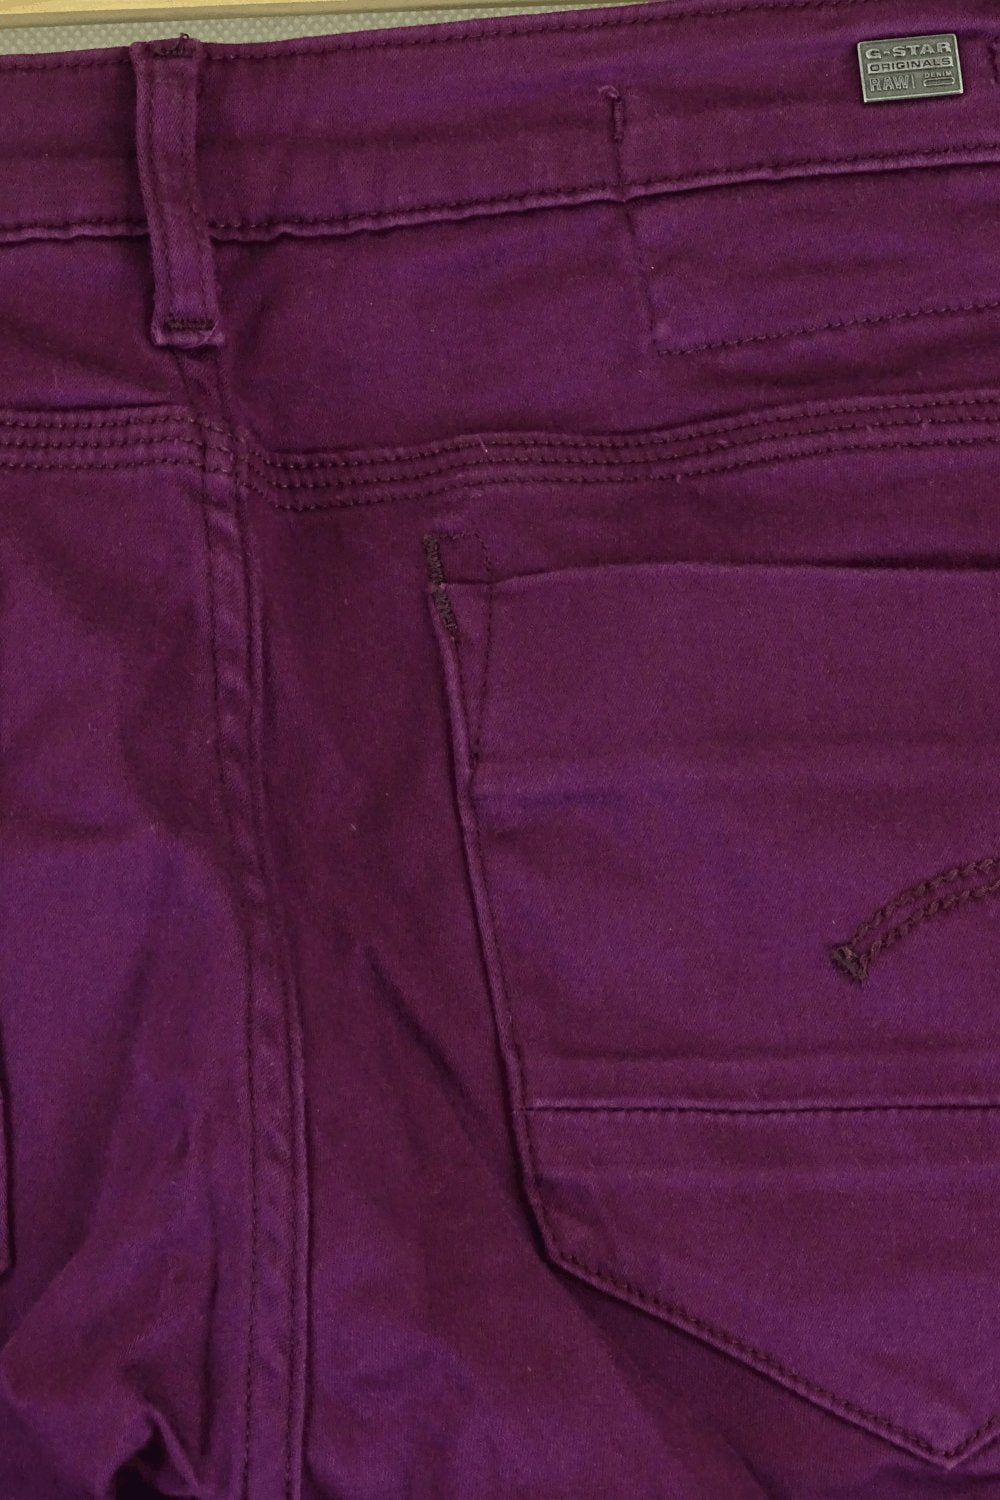 G Star Purple Jeans 27 (9AU)